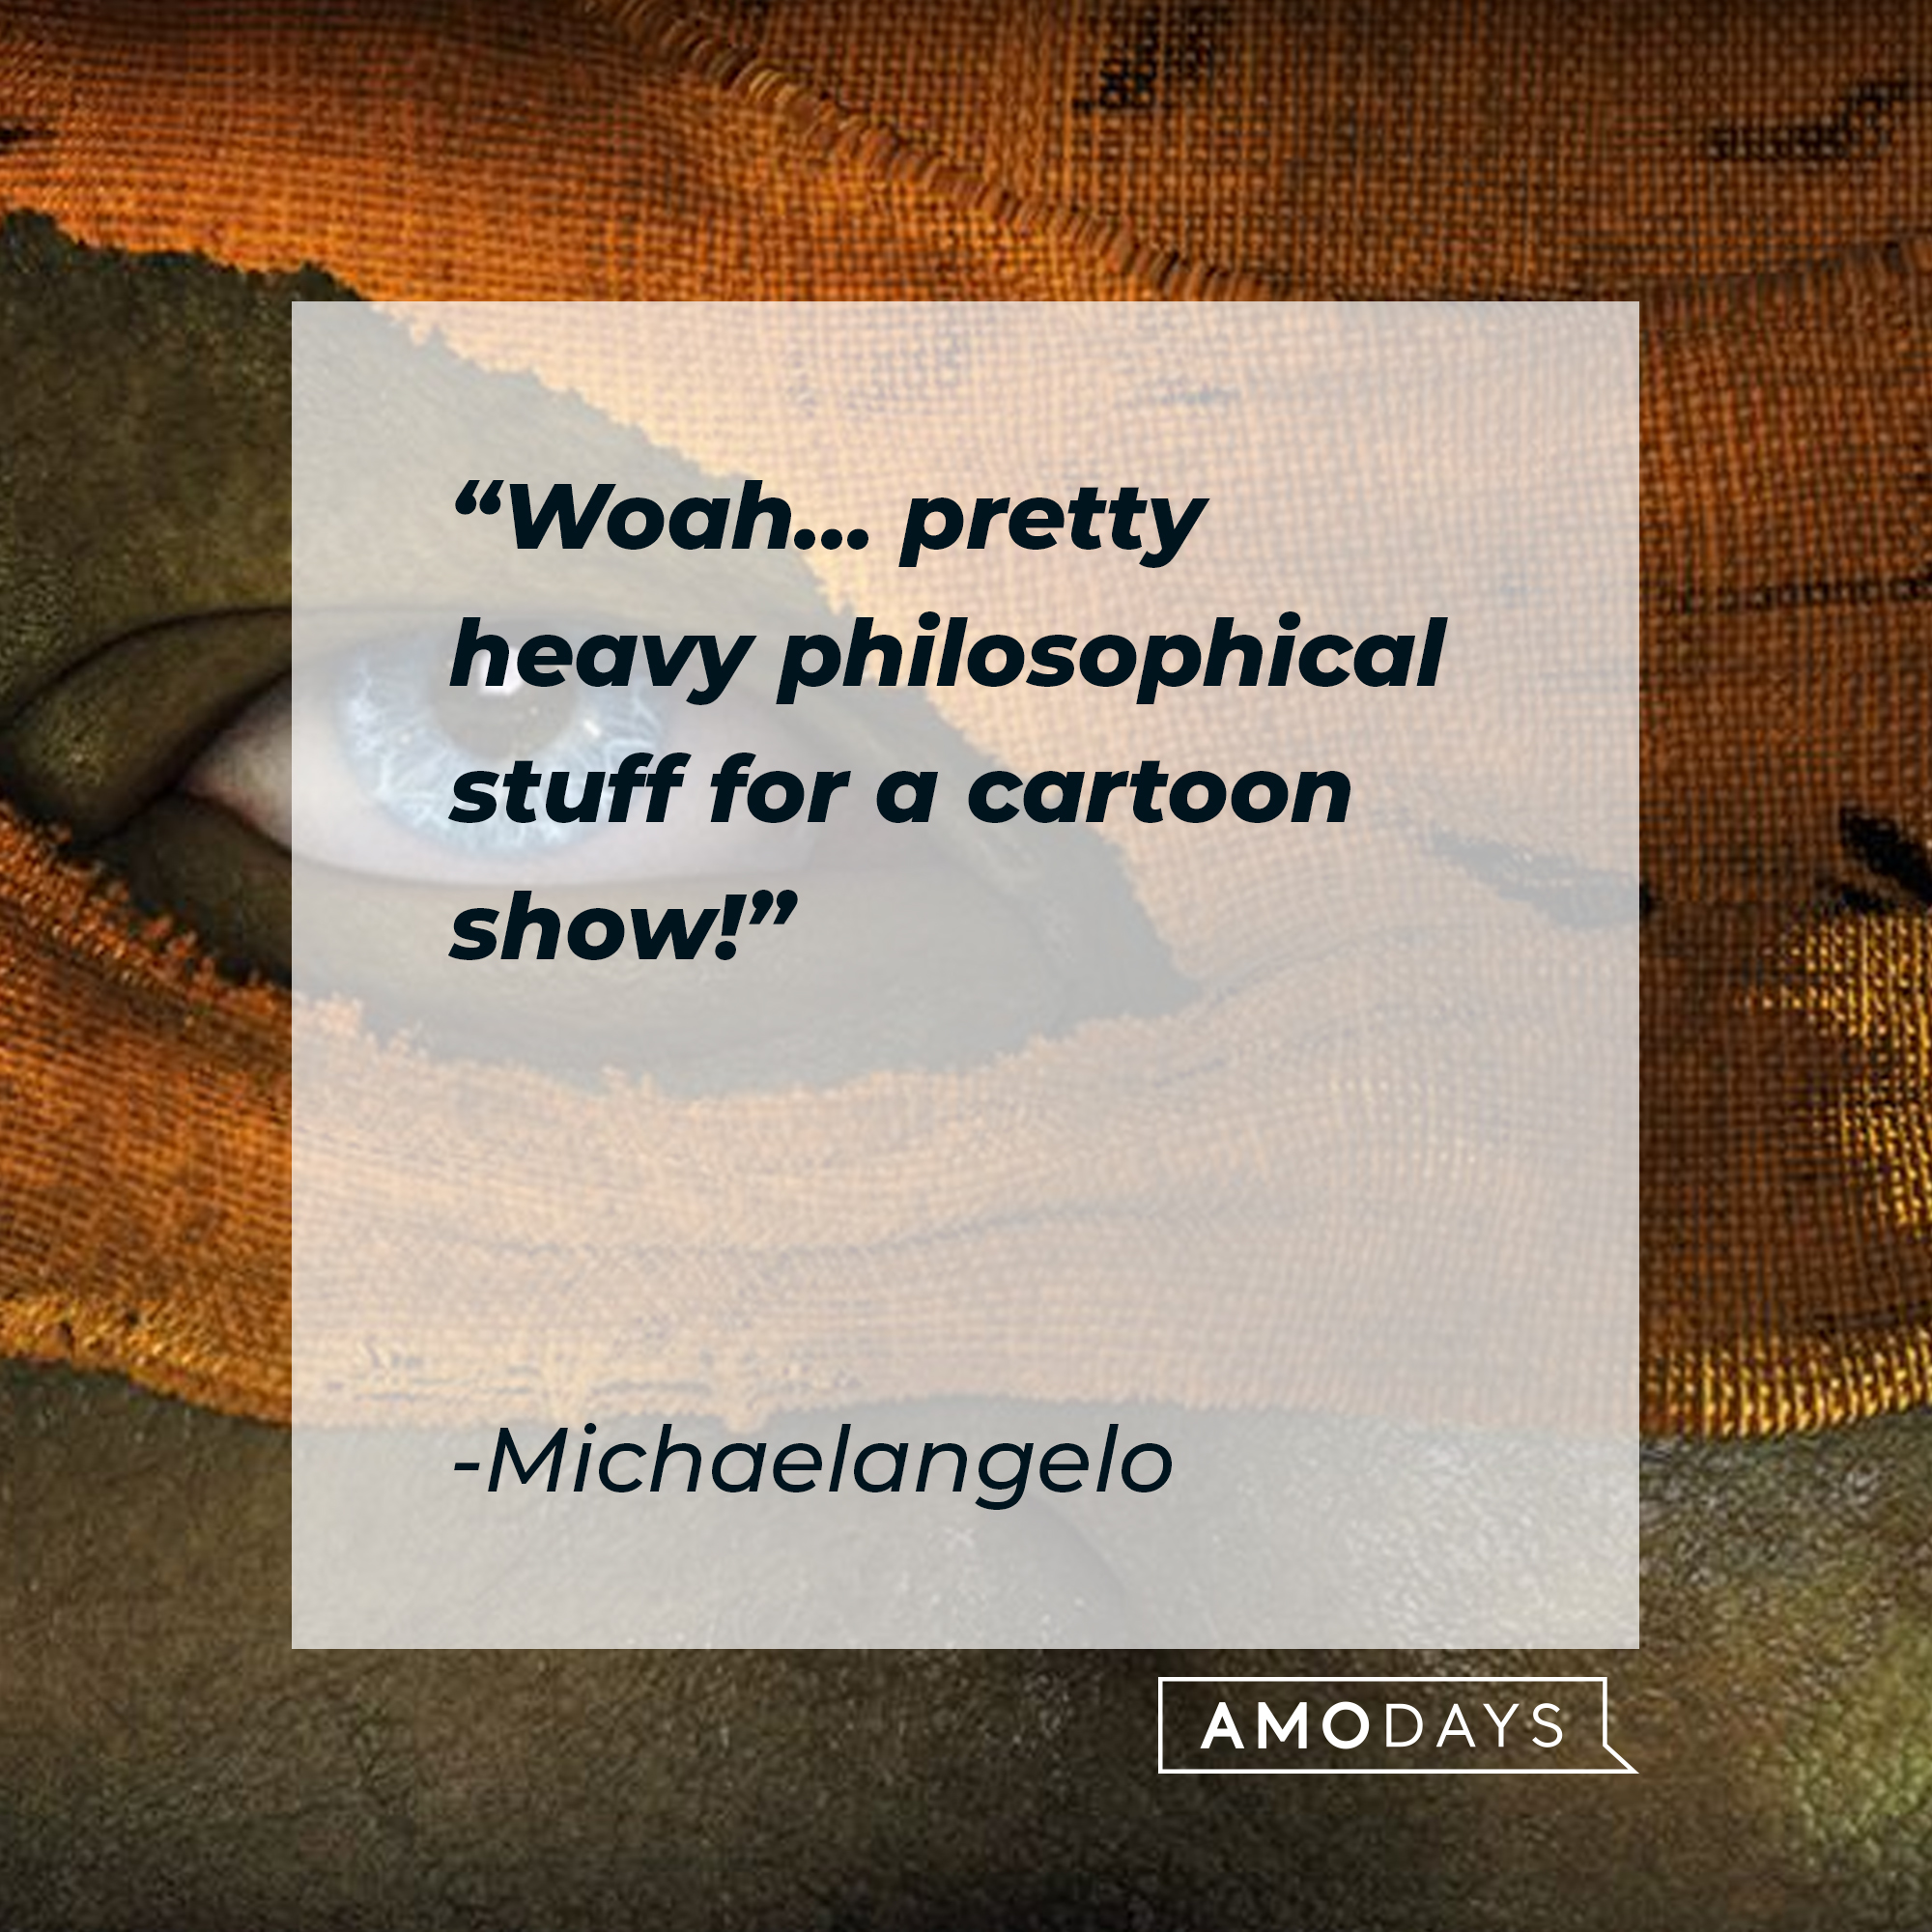 Michaelangelo's quote: "Woah… pretty heavy philosophical stuff for a cartoon show!" | Source: facebook.com/TMN